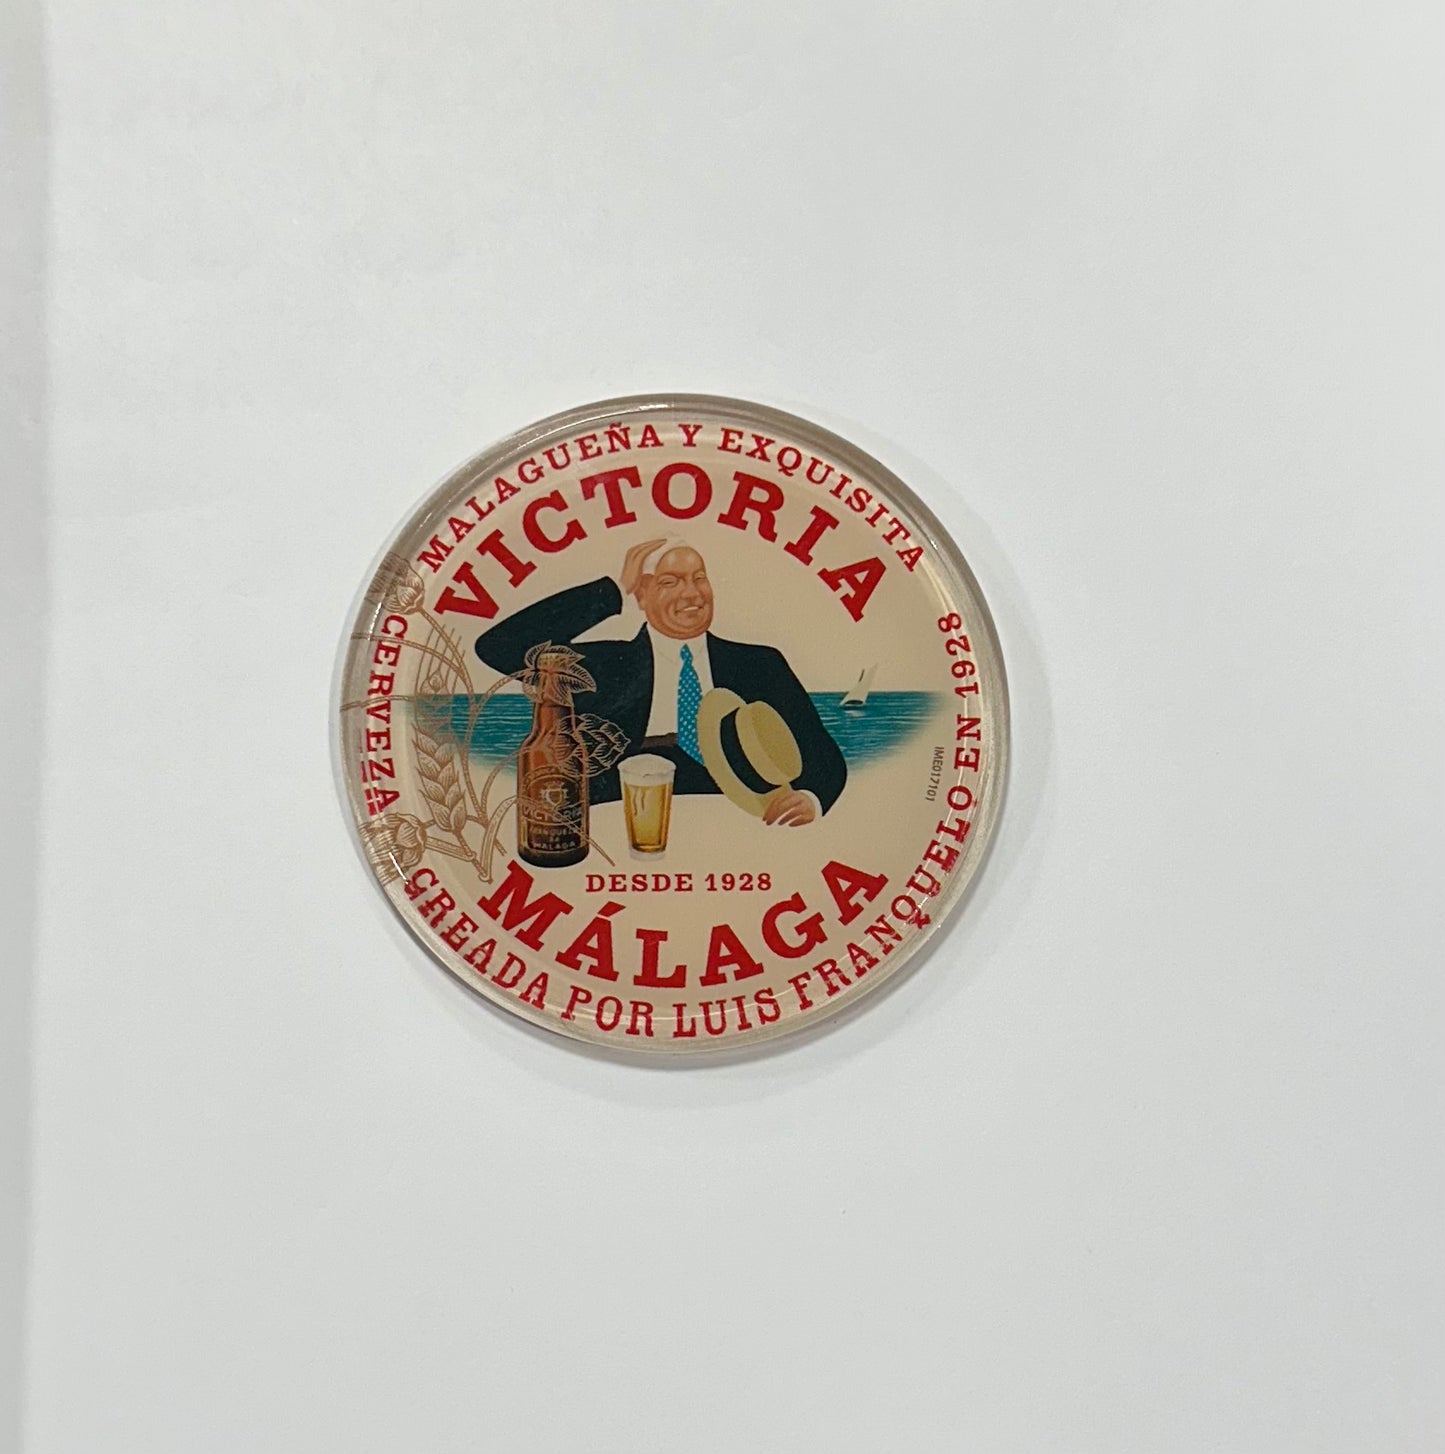 Victoria Malaga Circular tap badge